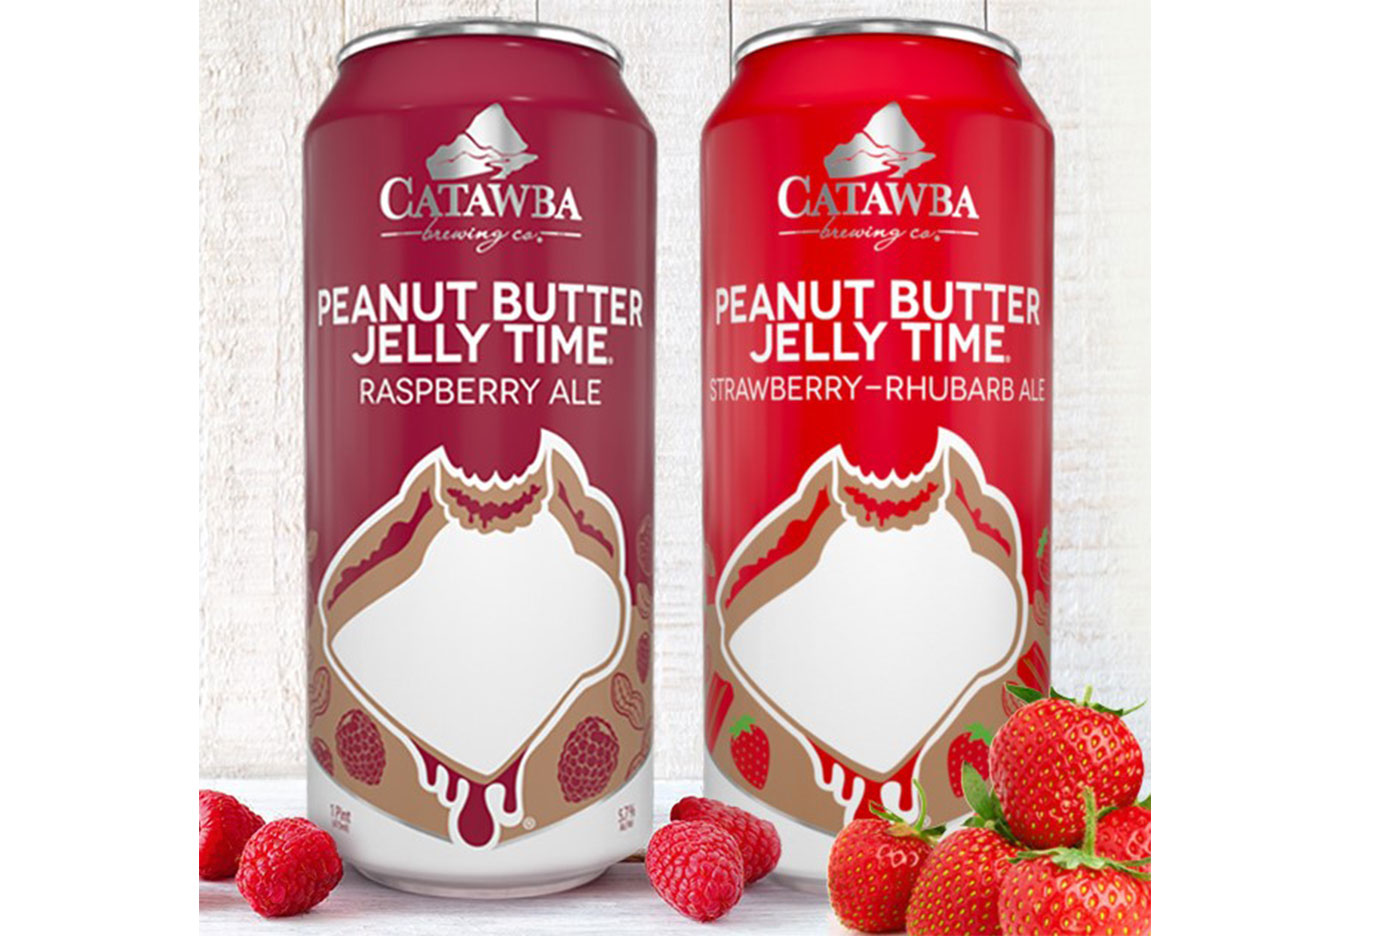 Catawba Peanut Butter Jelly Time Strawberry Rhubarb